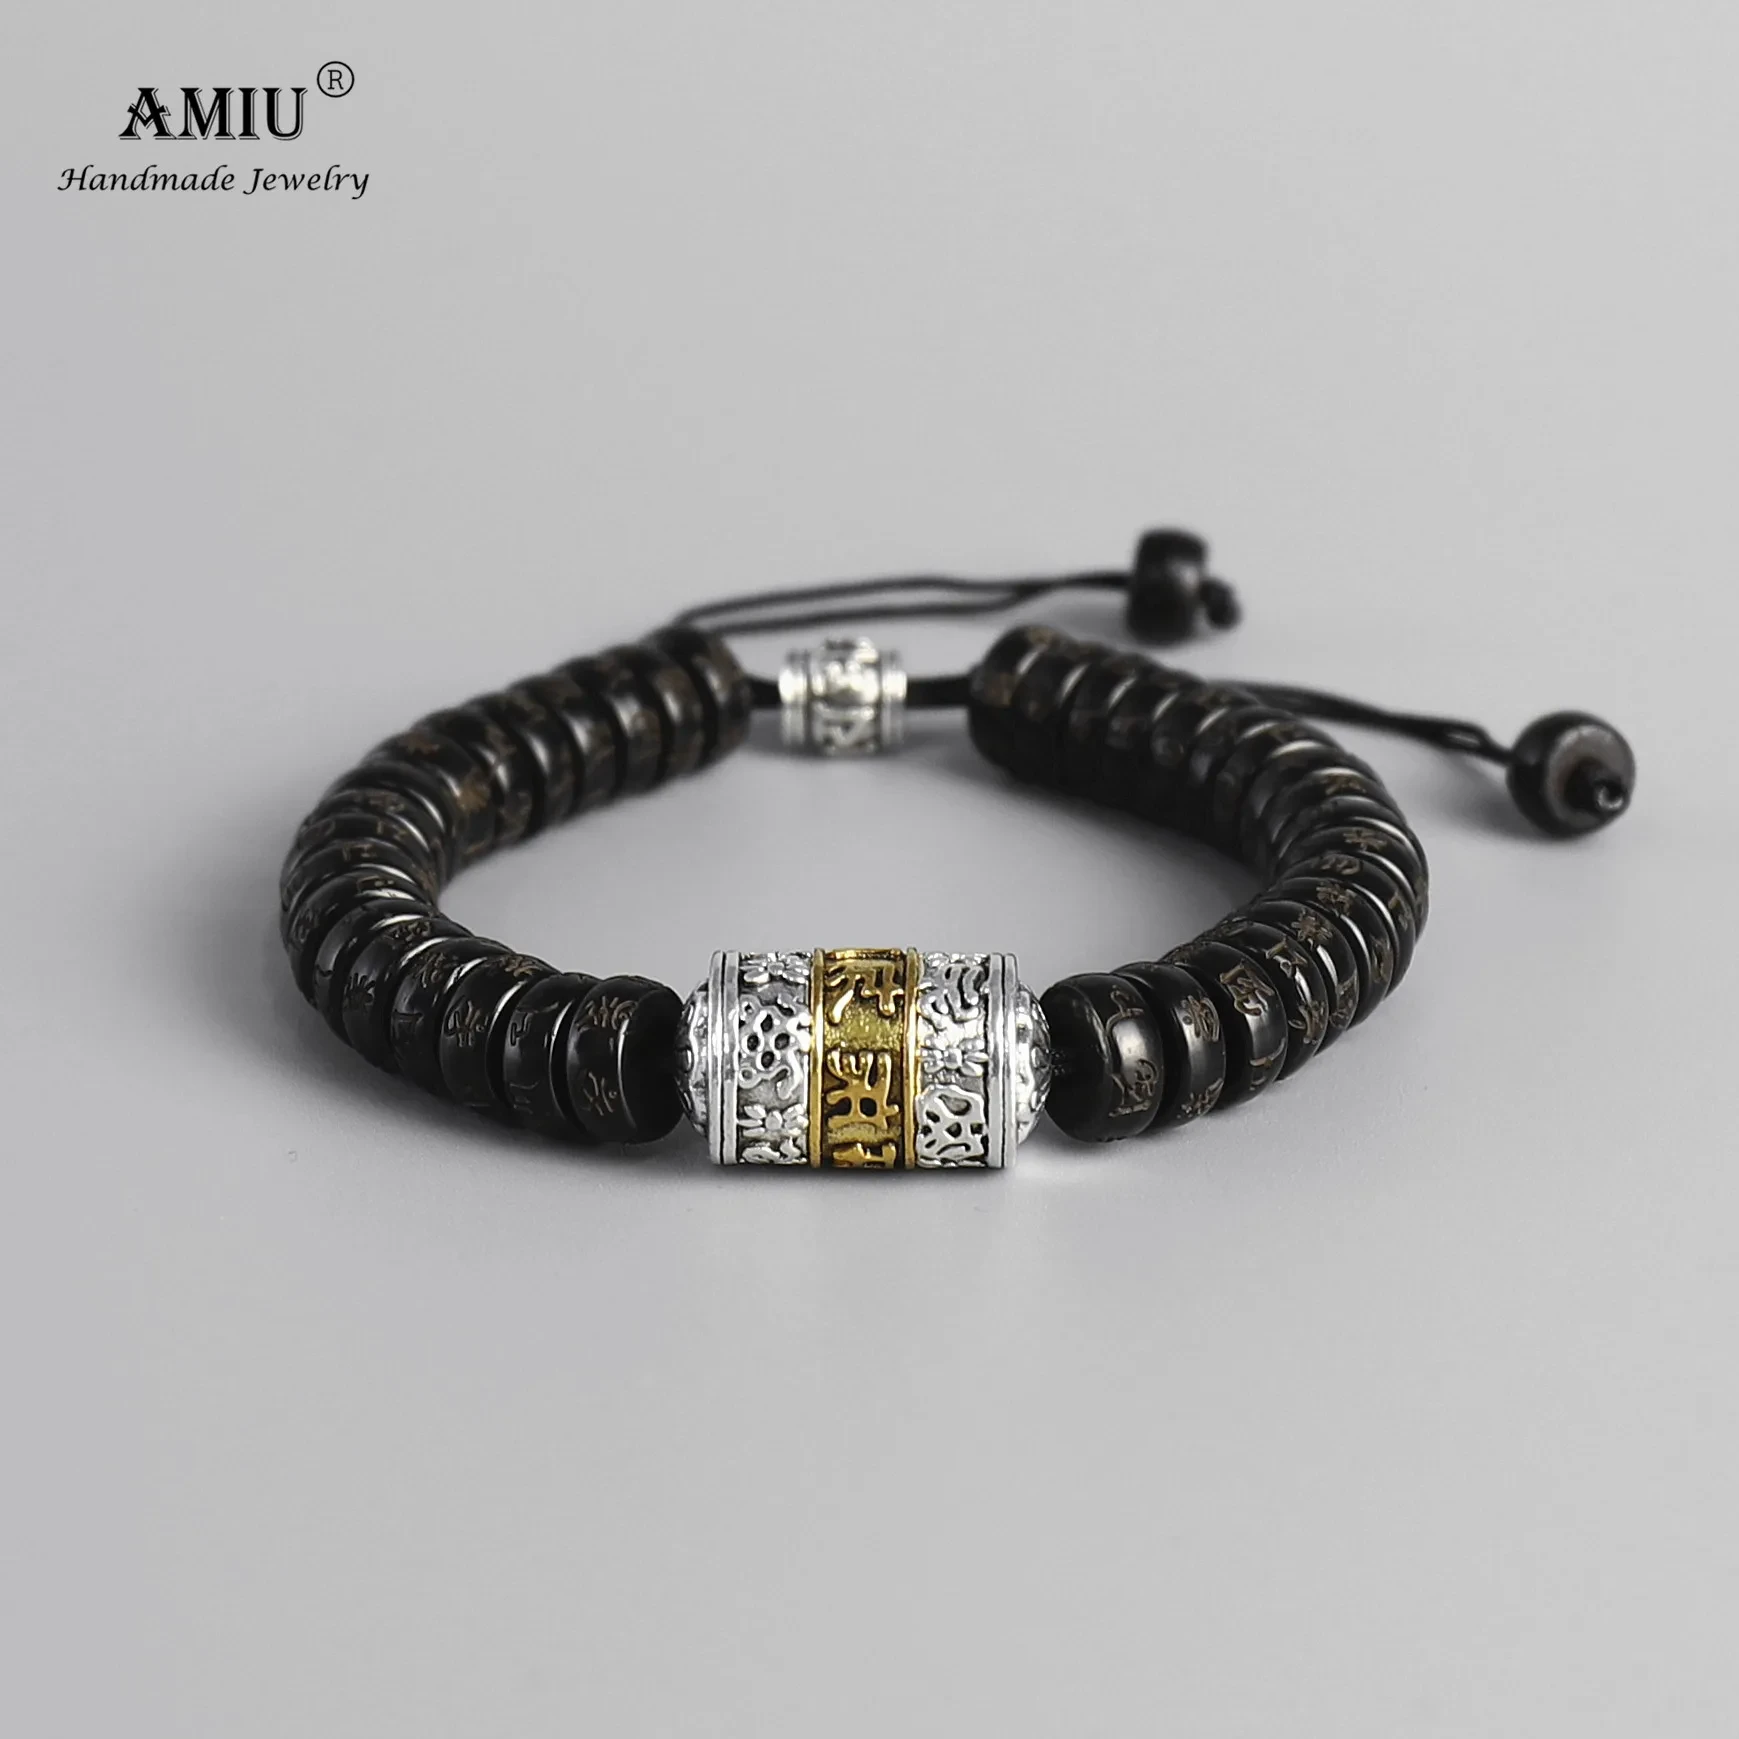 AMIU Natural Coconut Shell Beads Tibetan buddhism Vajra Charm White Copper Prayer Bell Handmade Tibet Bracelet For Man And Women